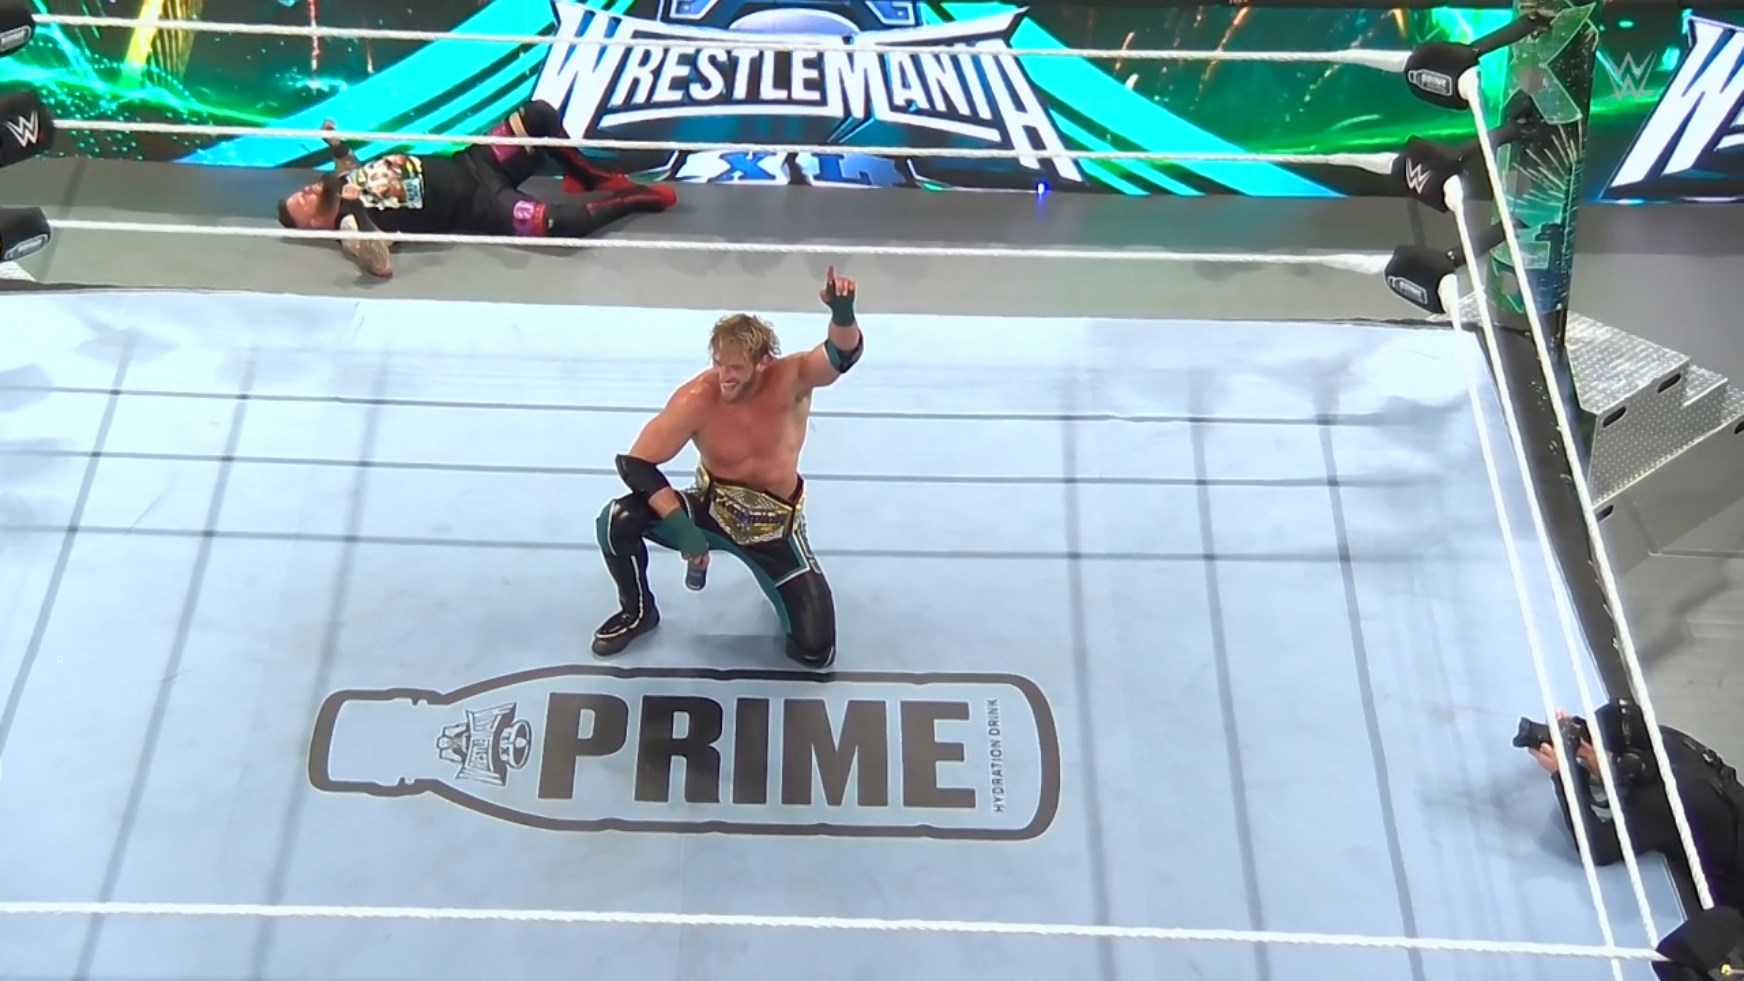 Logan Paul at WrestleMania XL featuring the PRIME logo.